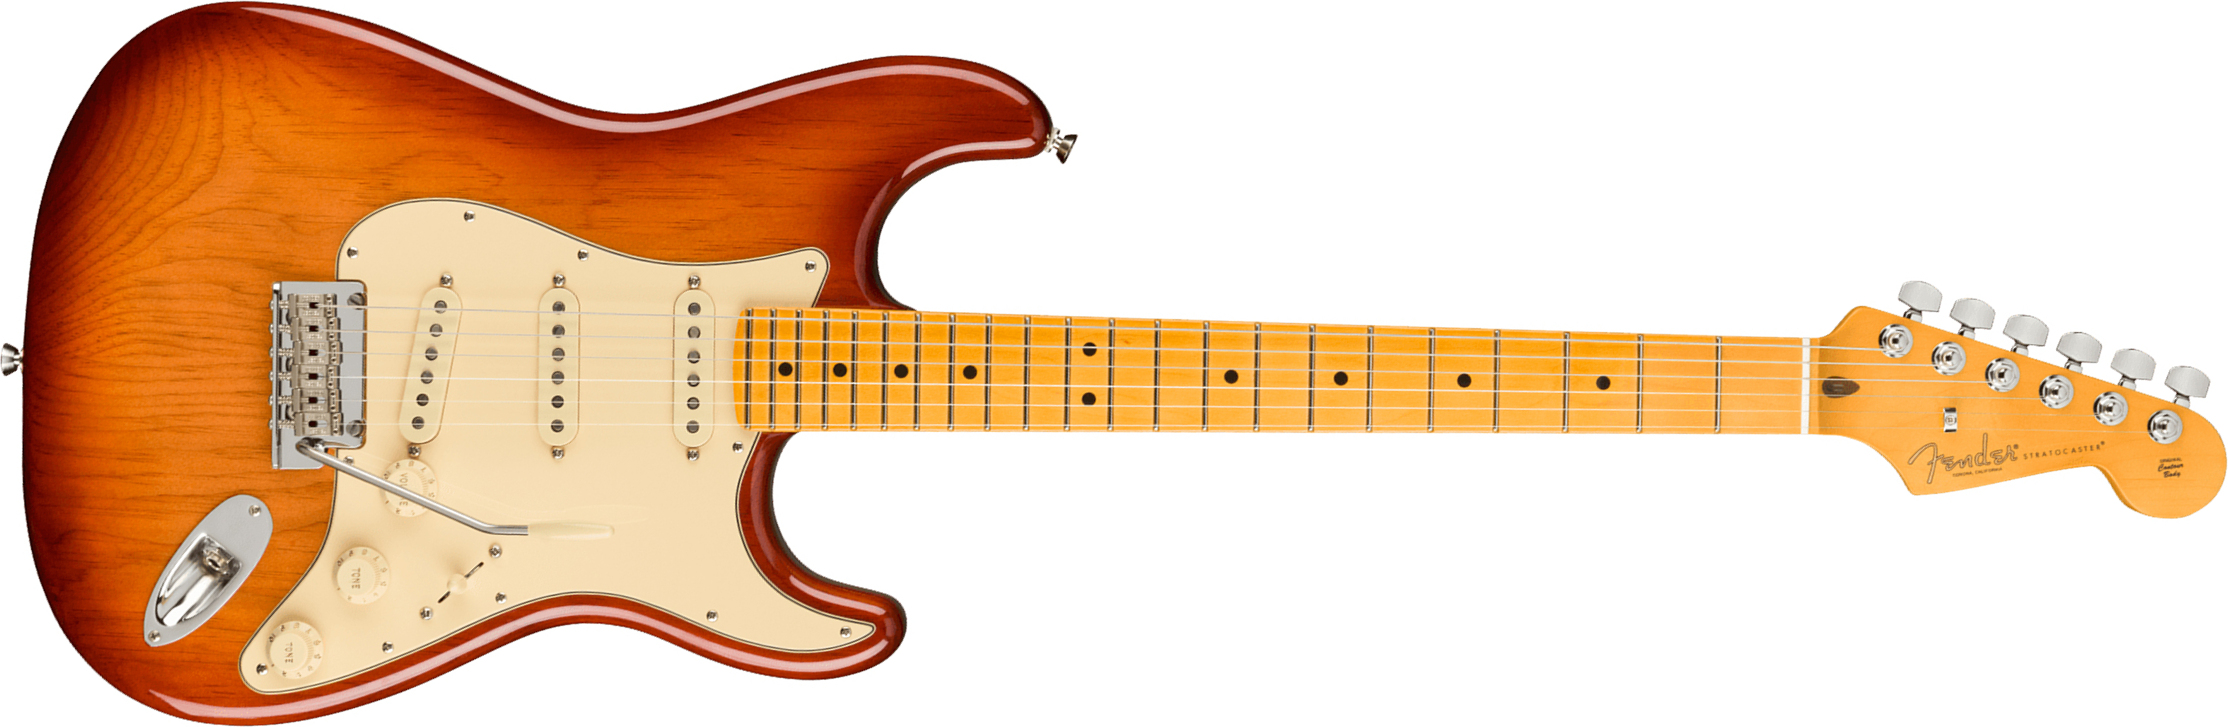 Fender Strat American Professional Ii Usa Mn - Sienna Sunburst - Str shape electric guitar - Main picture